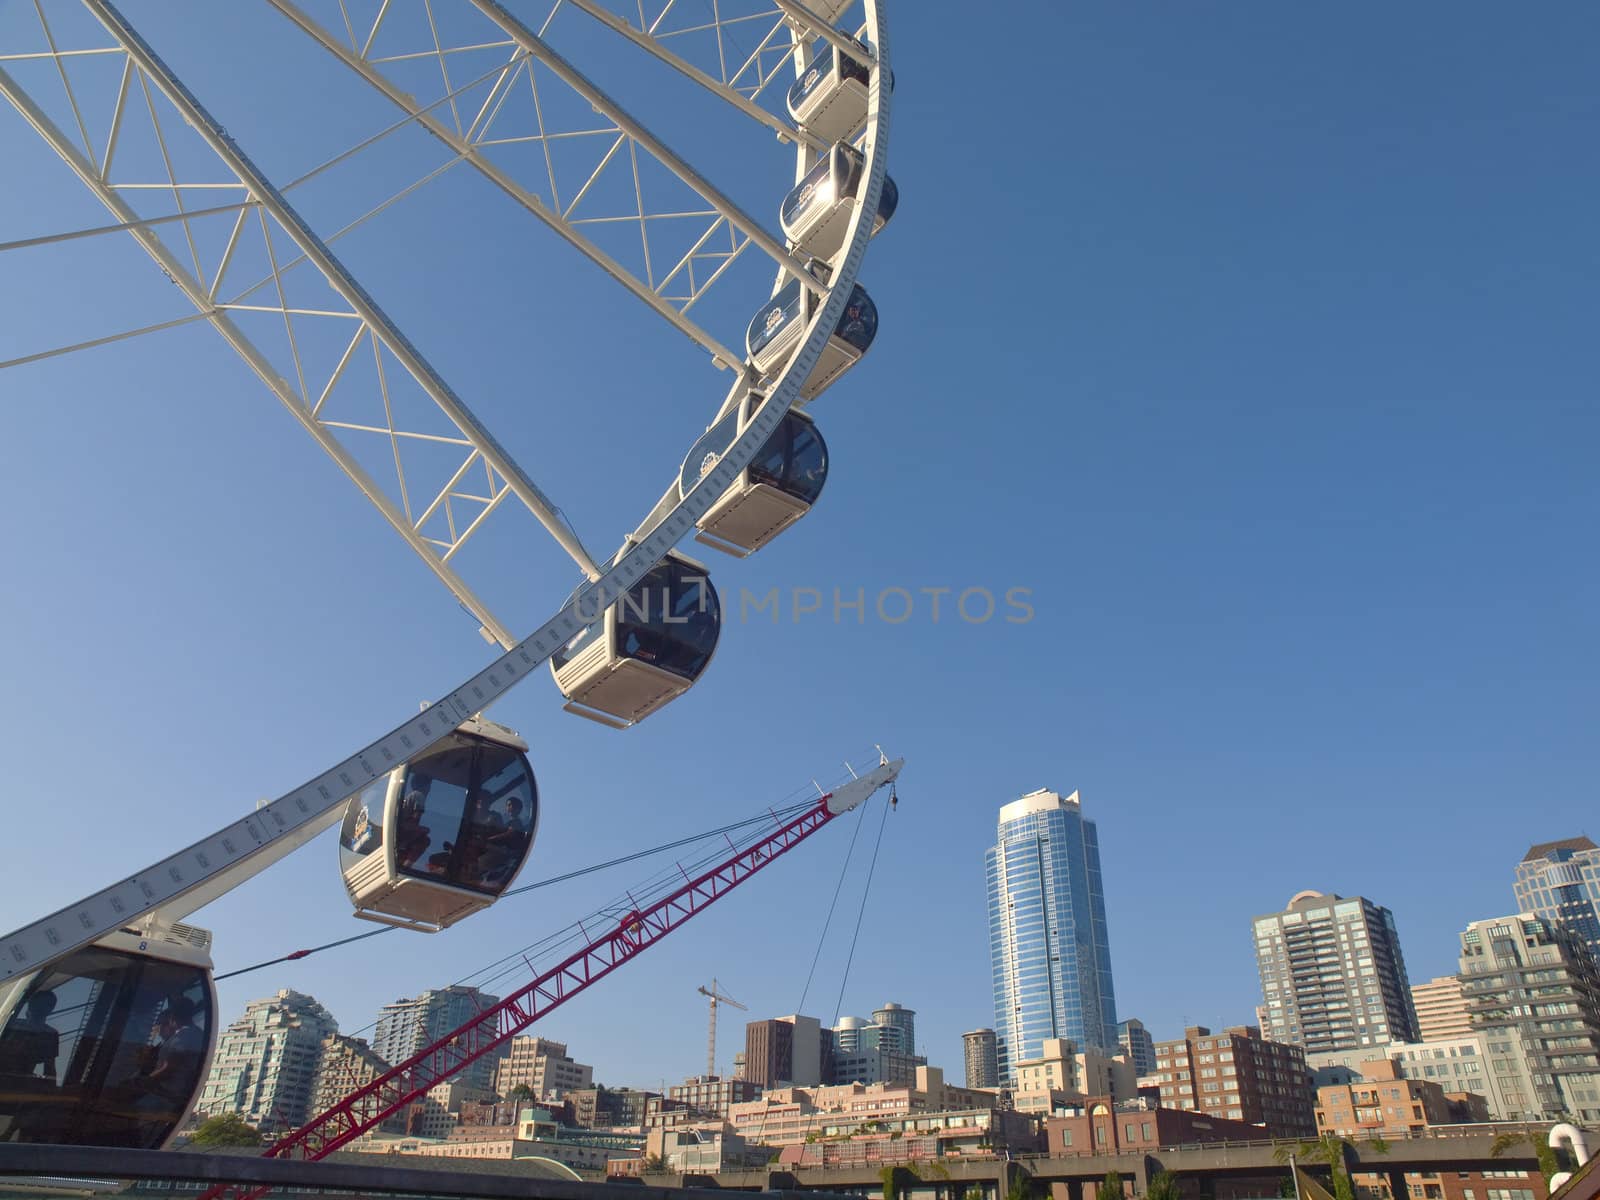 Ferris wheel and Seattle skyline near the waterfront.